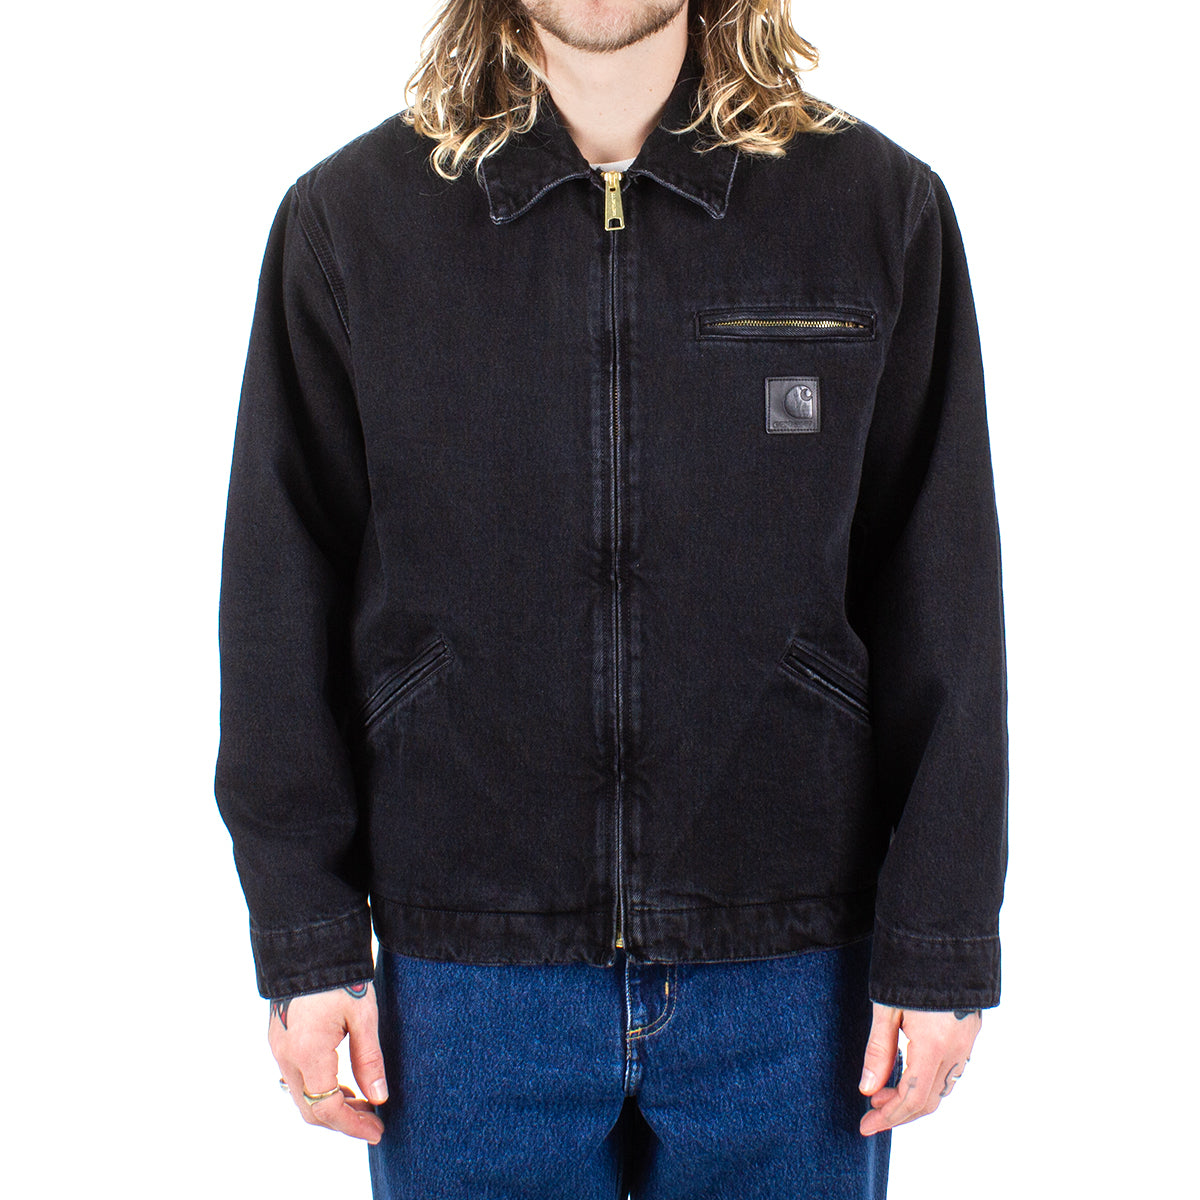 Carhartt WIP Rider Jacket Style # I031391-8906 Color : Black